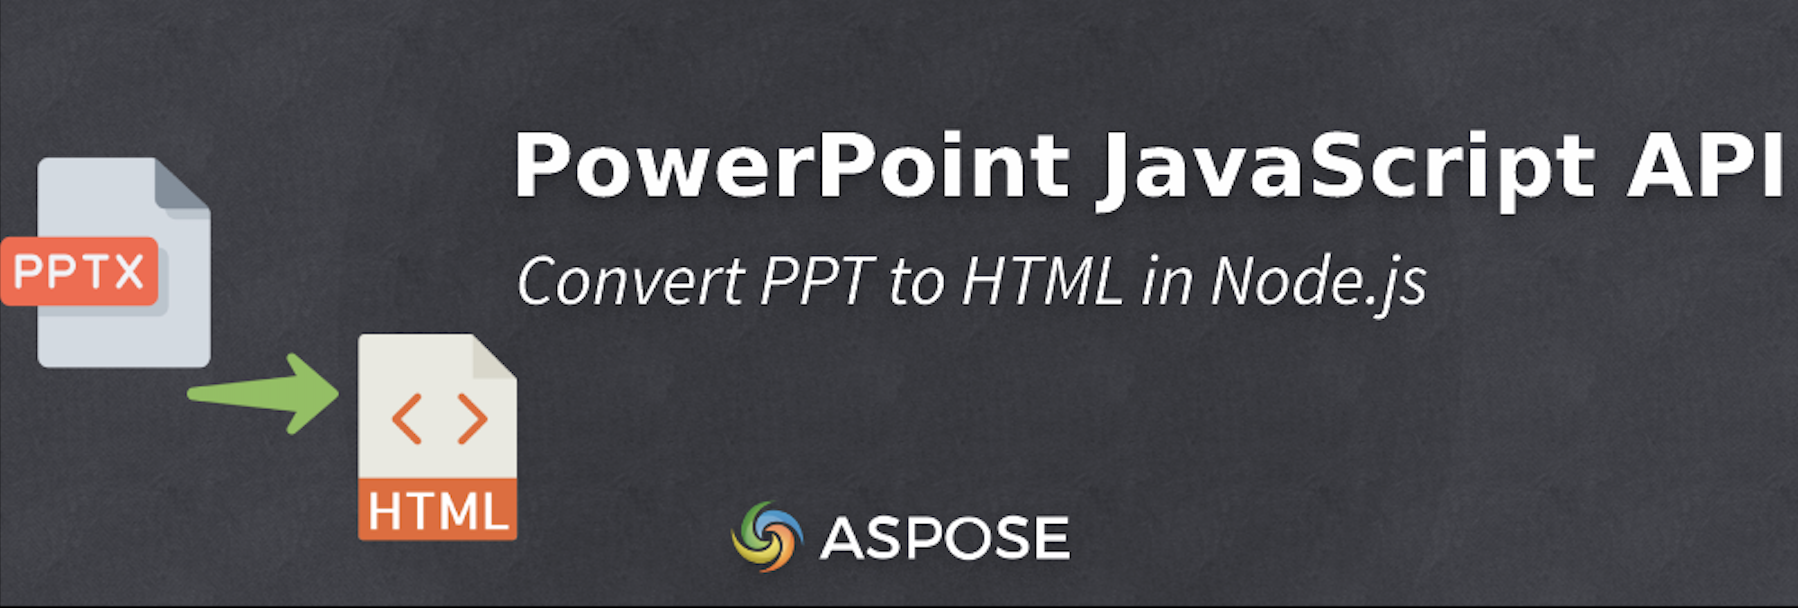 在 Node.js 中将 PPT 转换为 HTML - PowerPoint JavaScript API